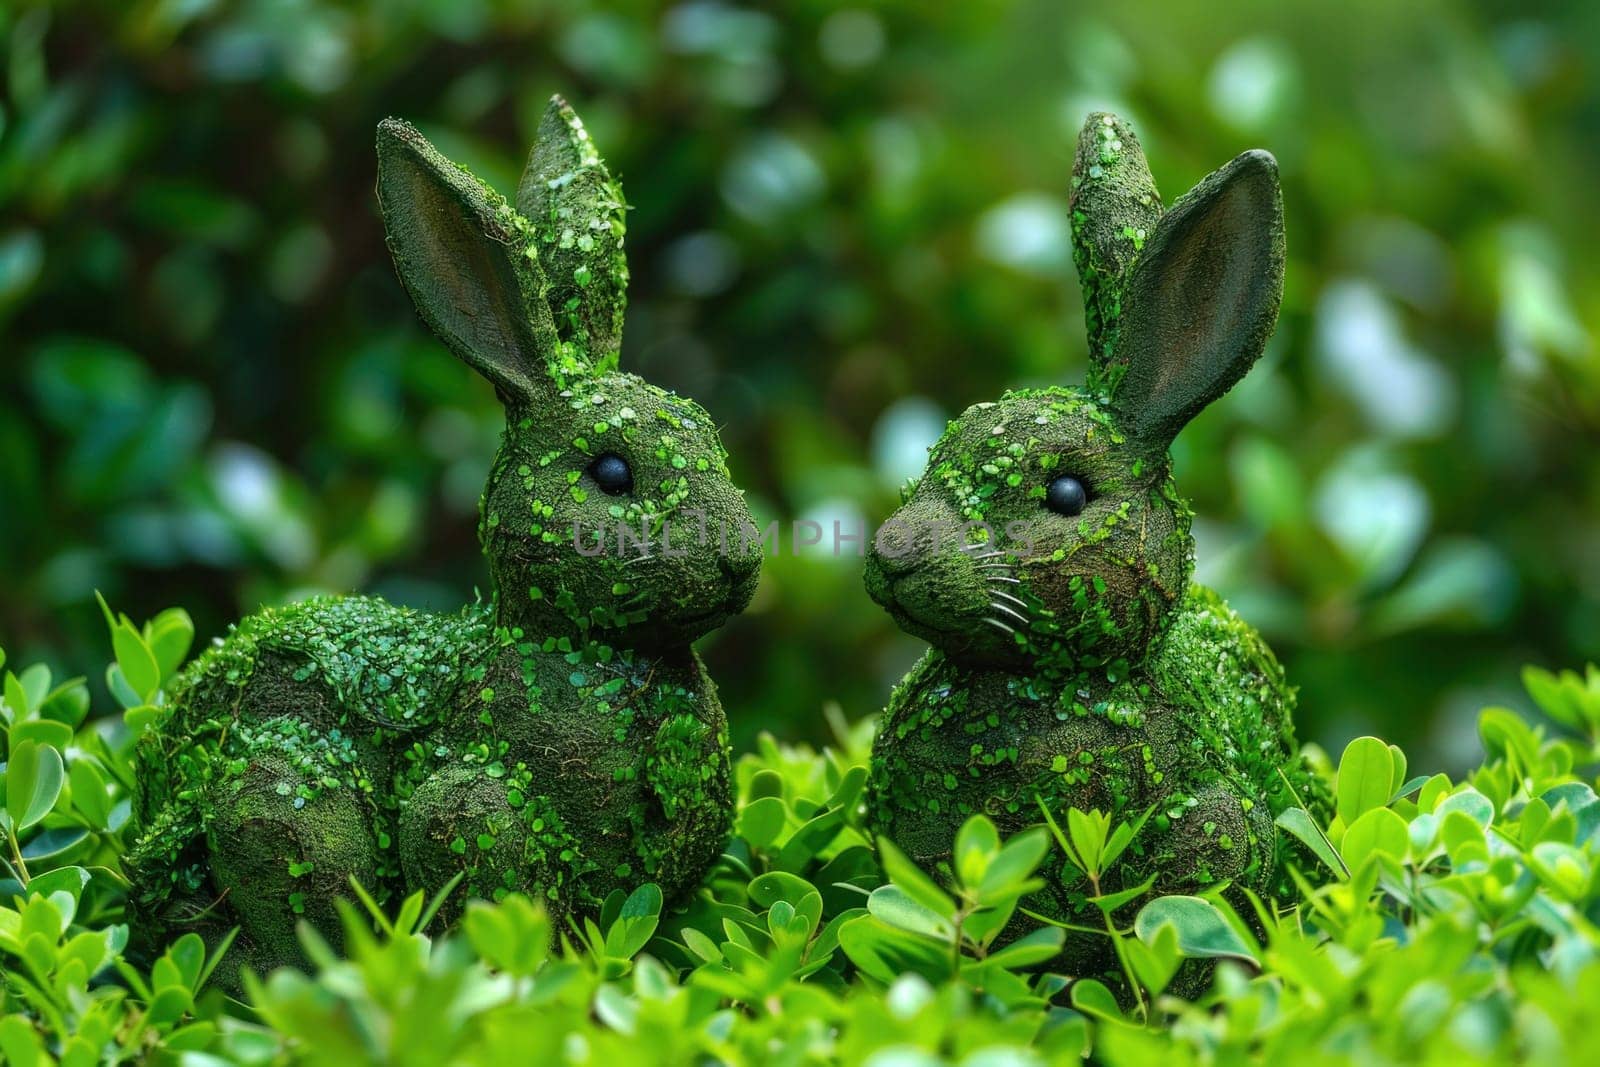 Two green rabbits enjoying nature among lush greenery in a peaceful garden setting